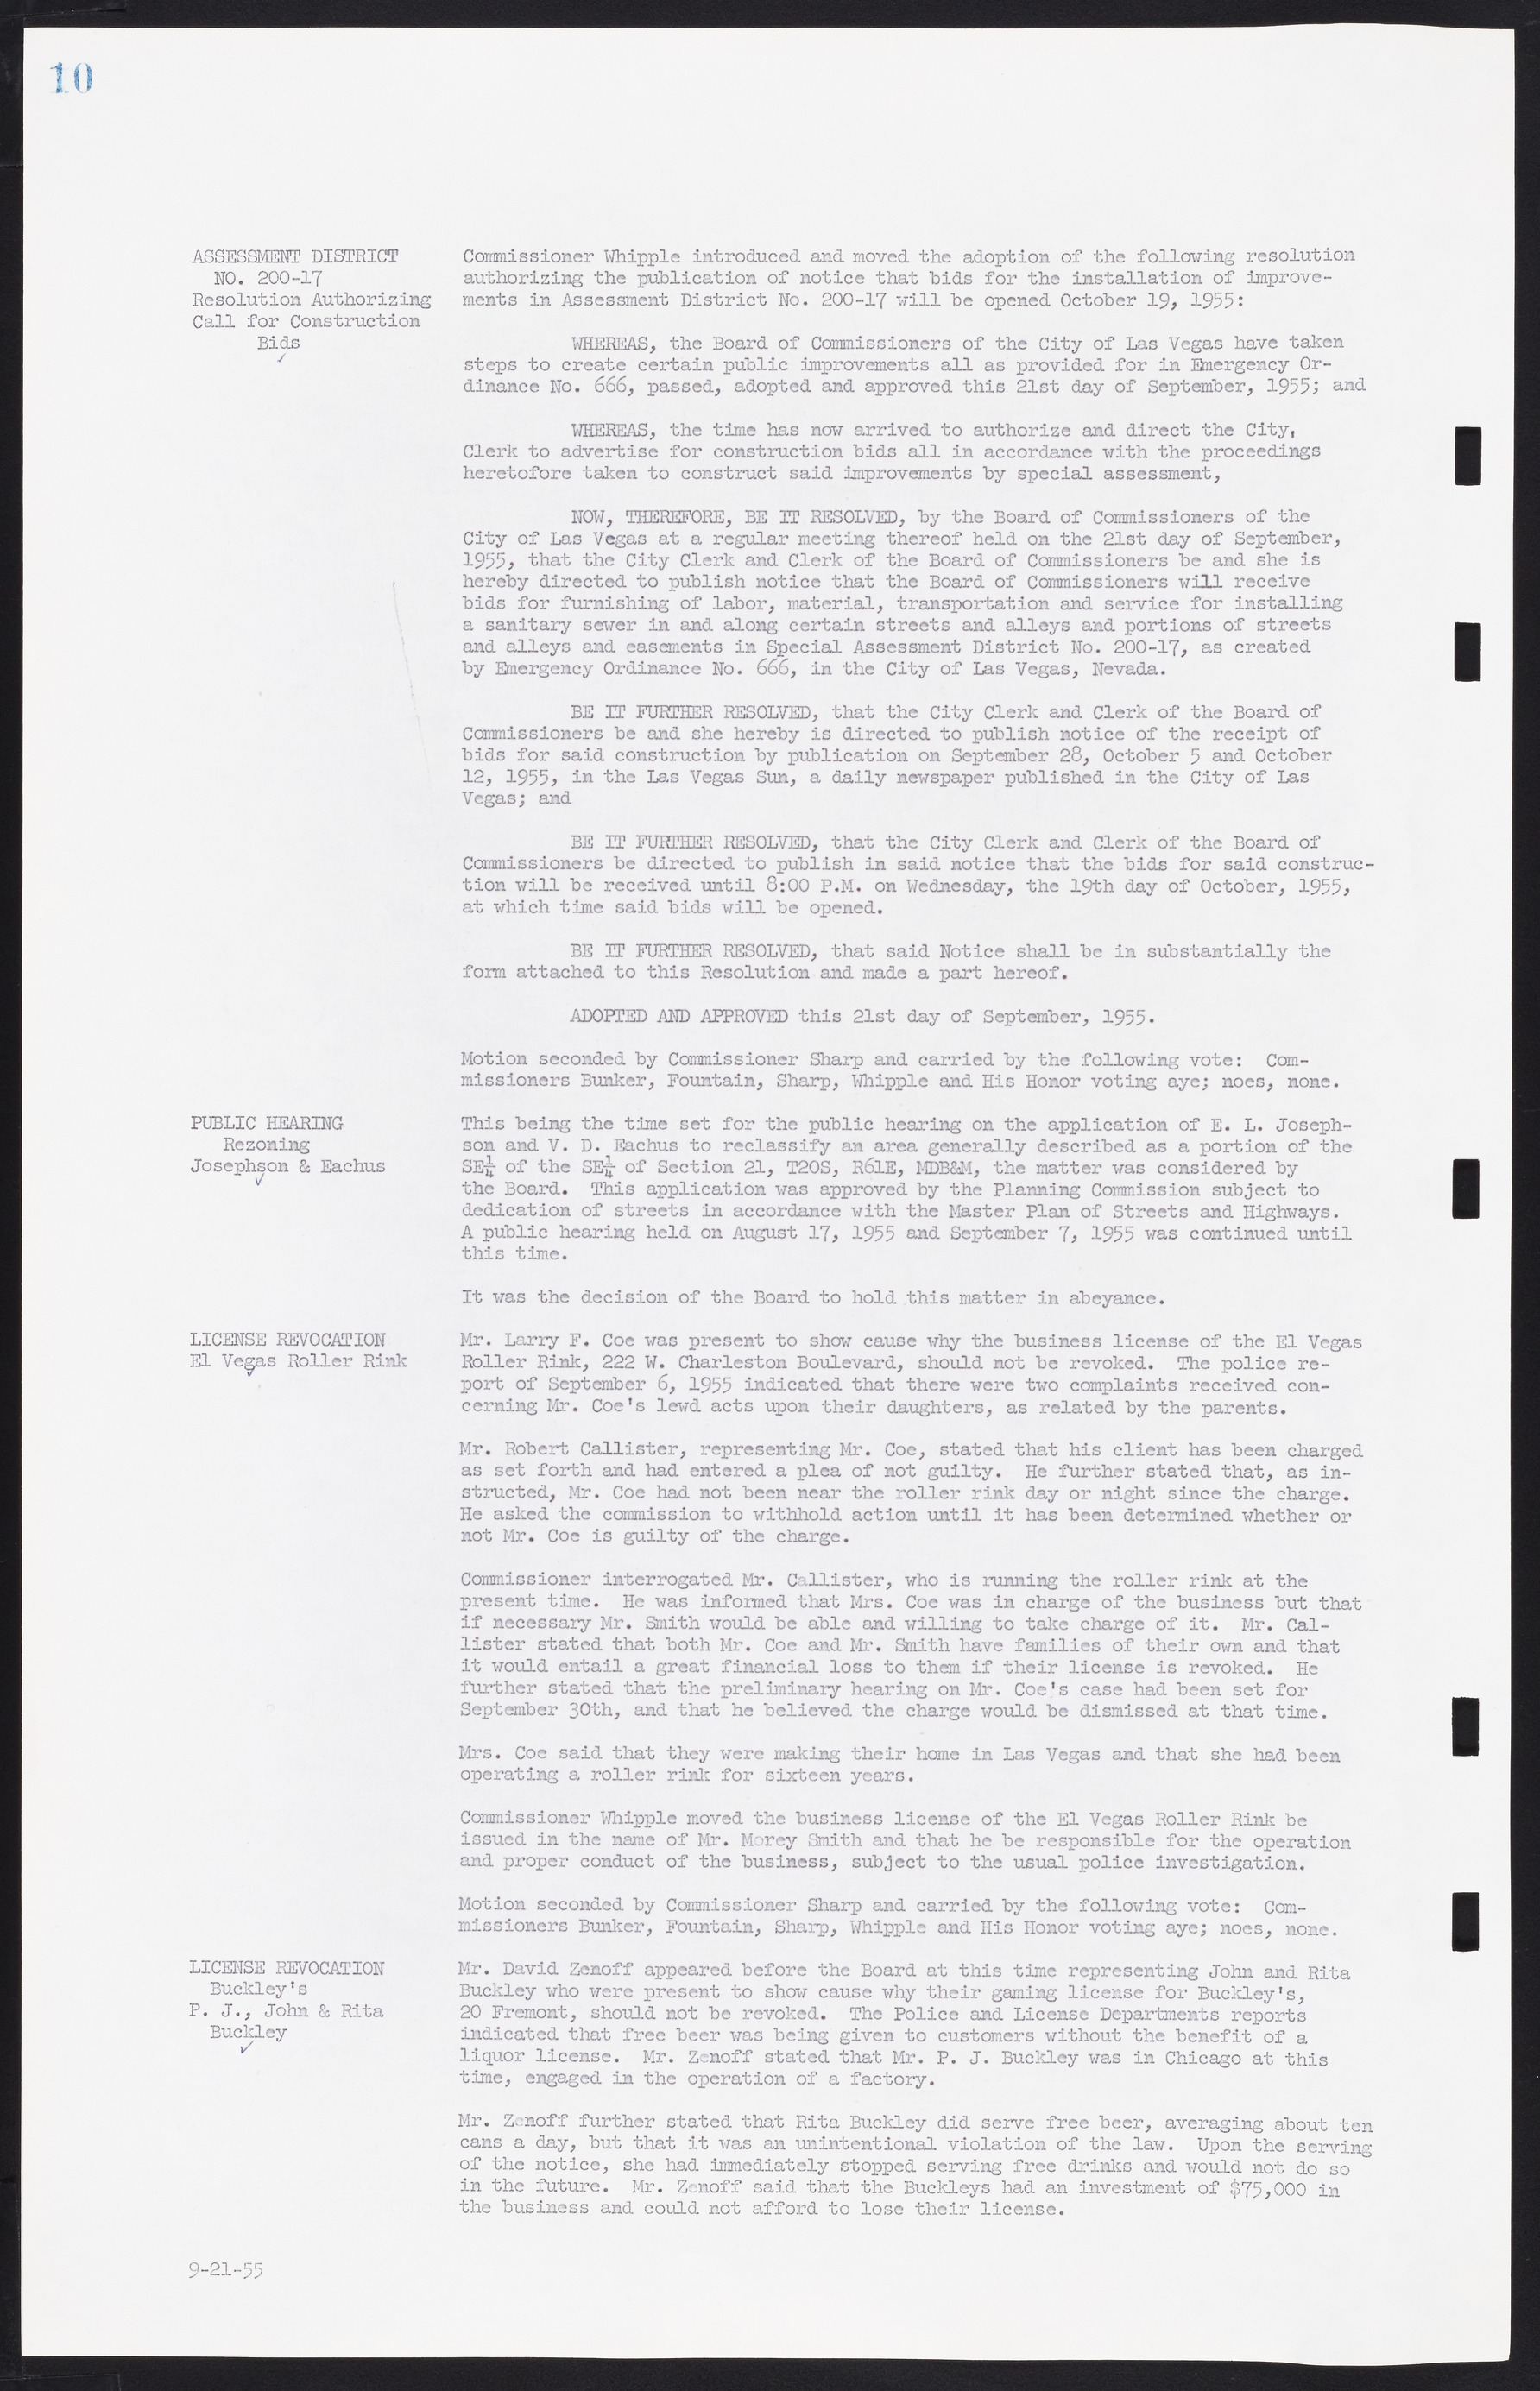 Las Vegas City Commission Minutes, September 21, 1955 to November 20, 1957, lvc000010-16